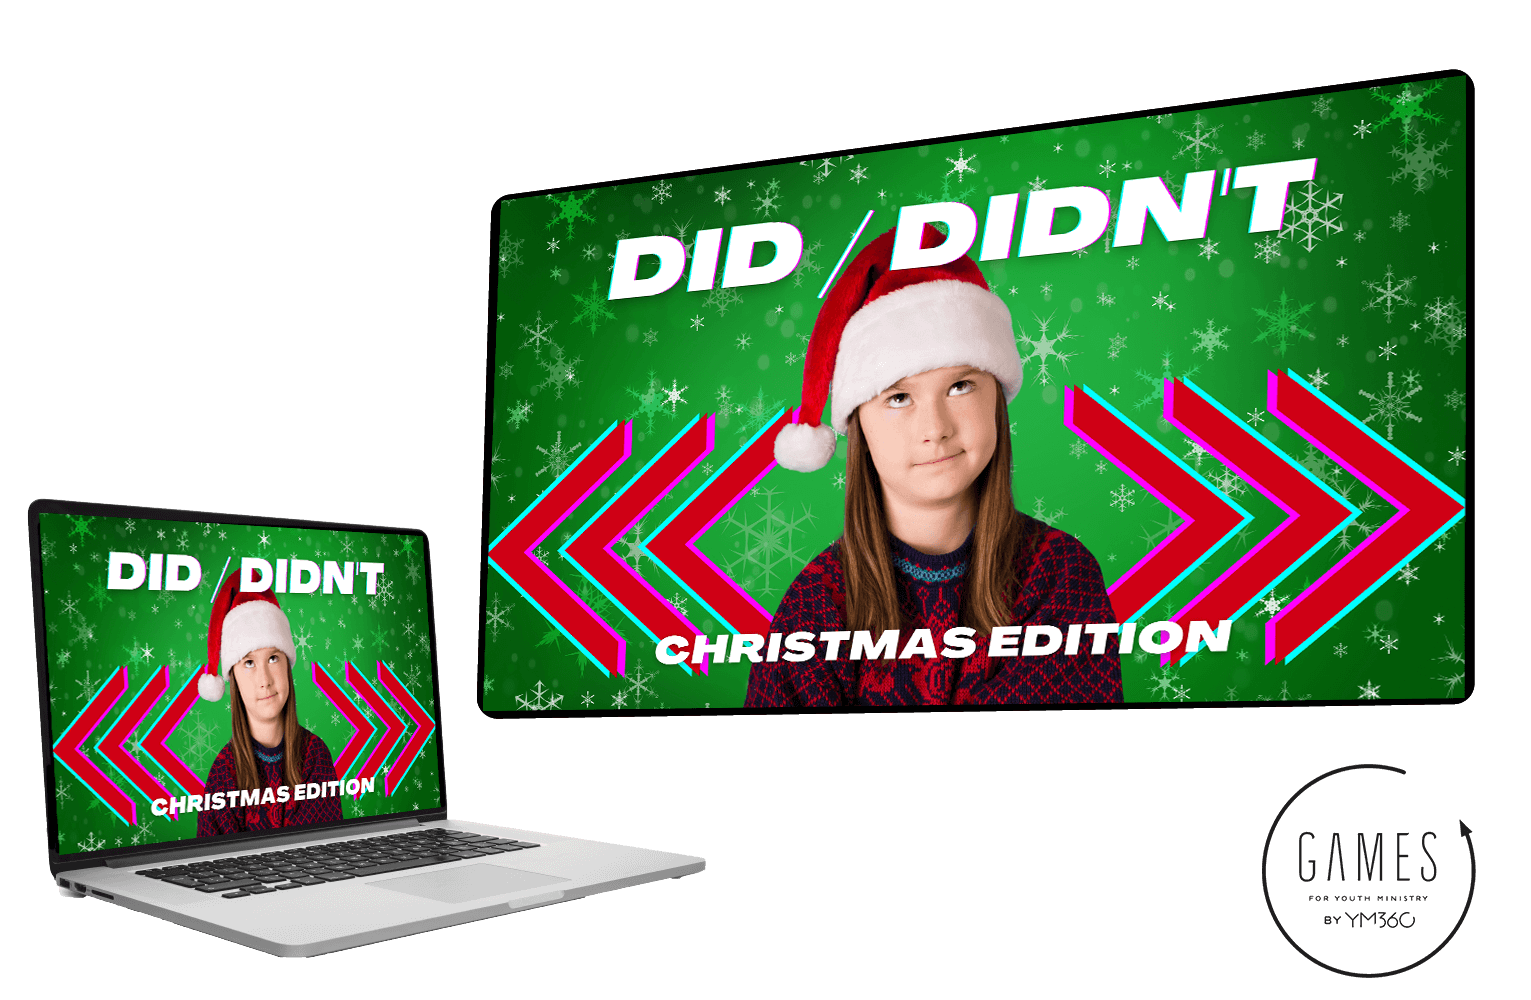 Did / Didn't: Christmas Edition